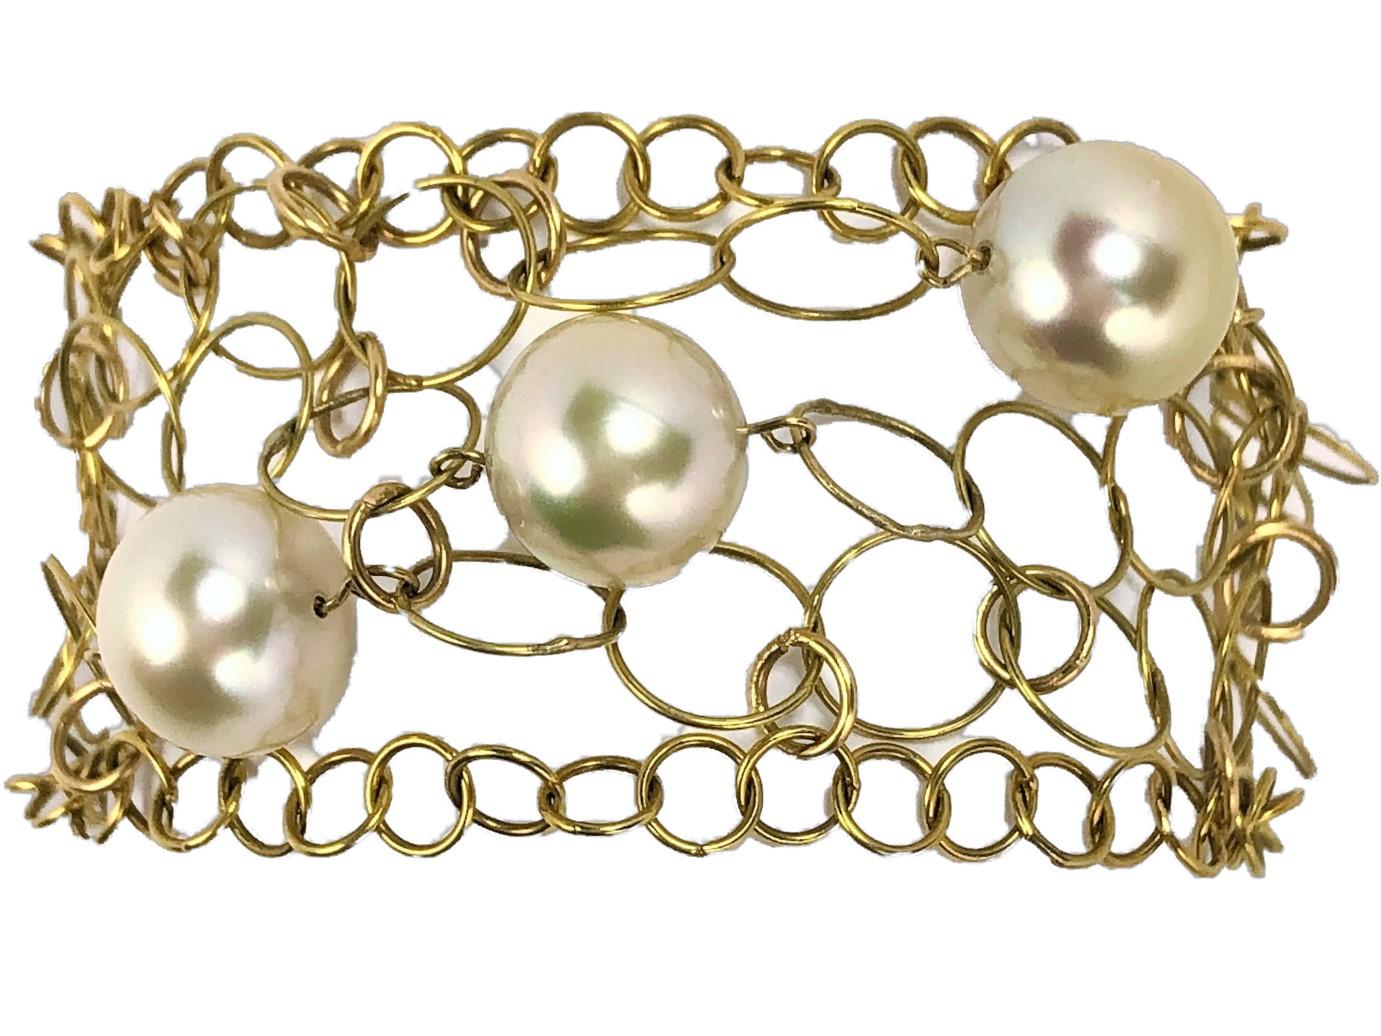 Women's Gold Interlocking Wire Link Bracelet with Pearls